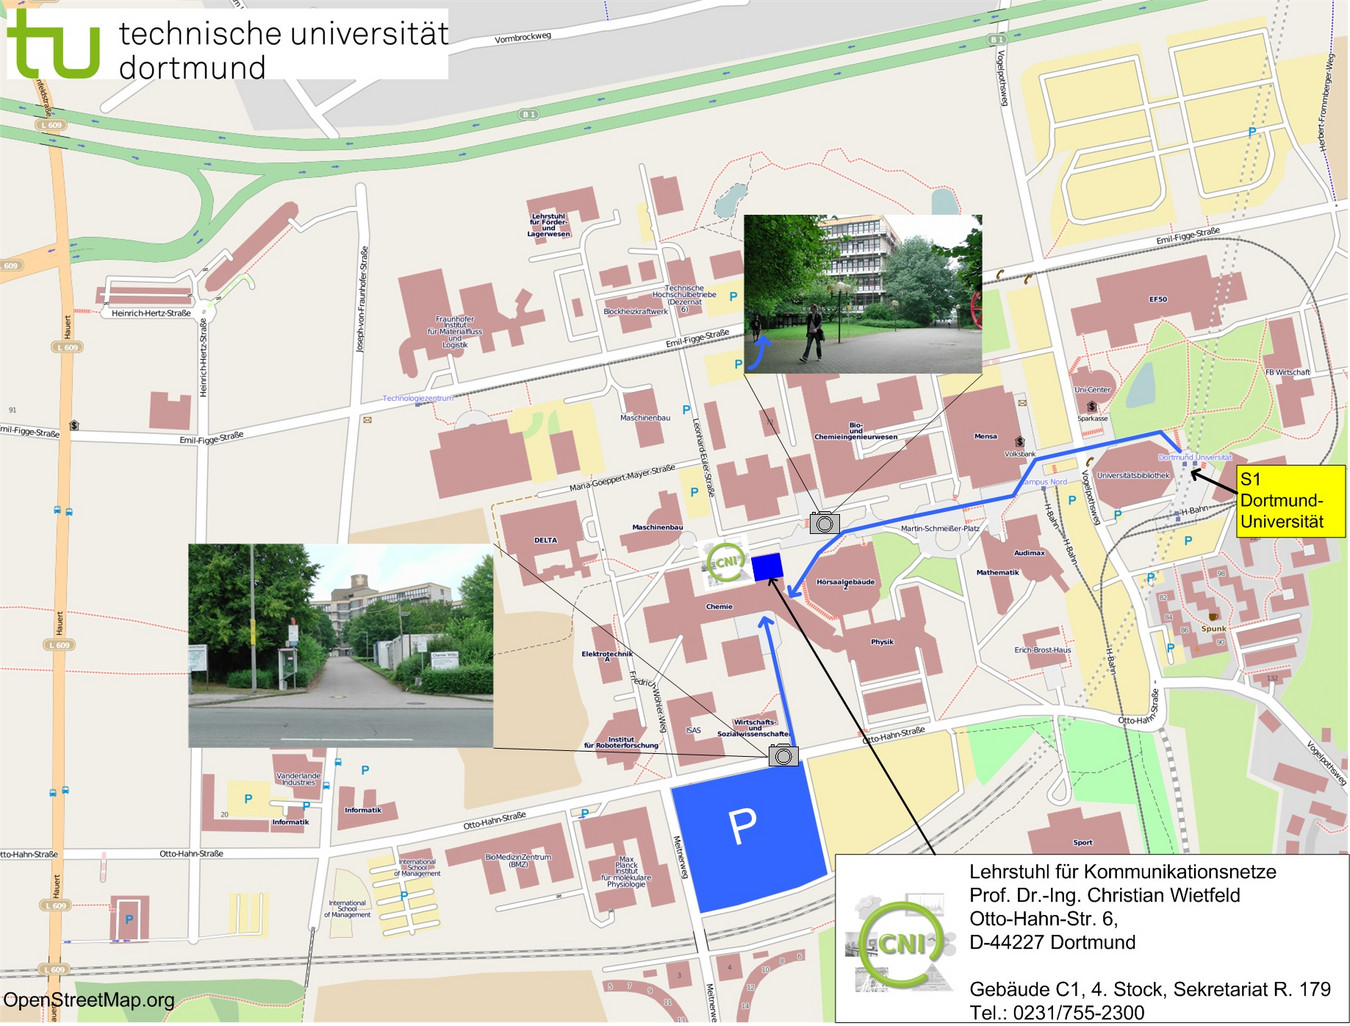 Arrival map for CNI at TU Dortmund campus